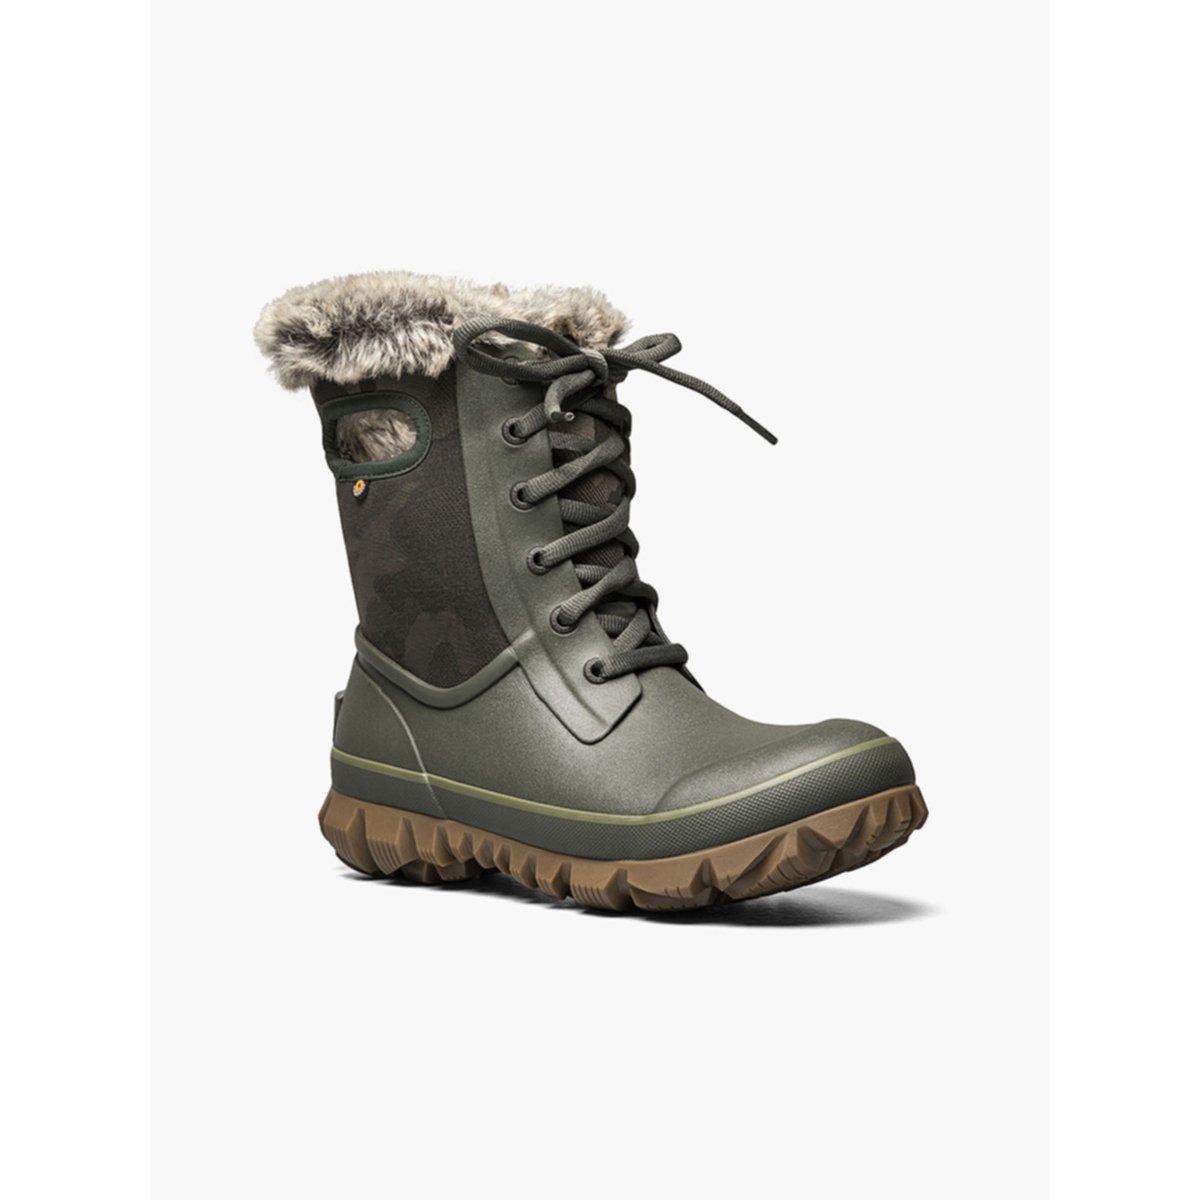 BOGS Women's Arcata Tontal Camo Waterproof Lace Up Snow Boots Dark Green - 72693-301 - Dark Green, 8